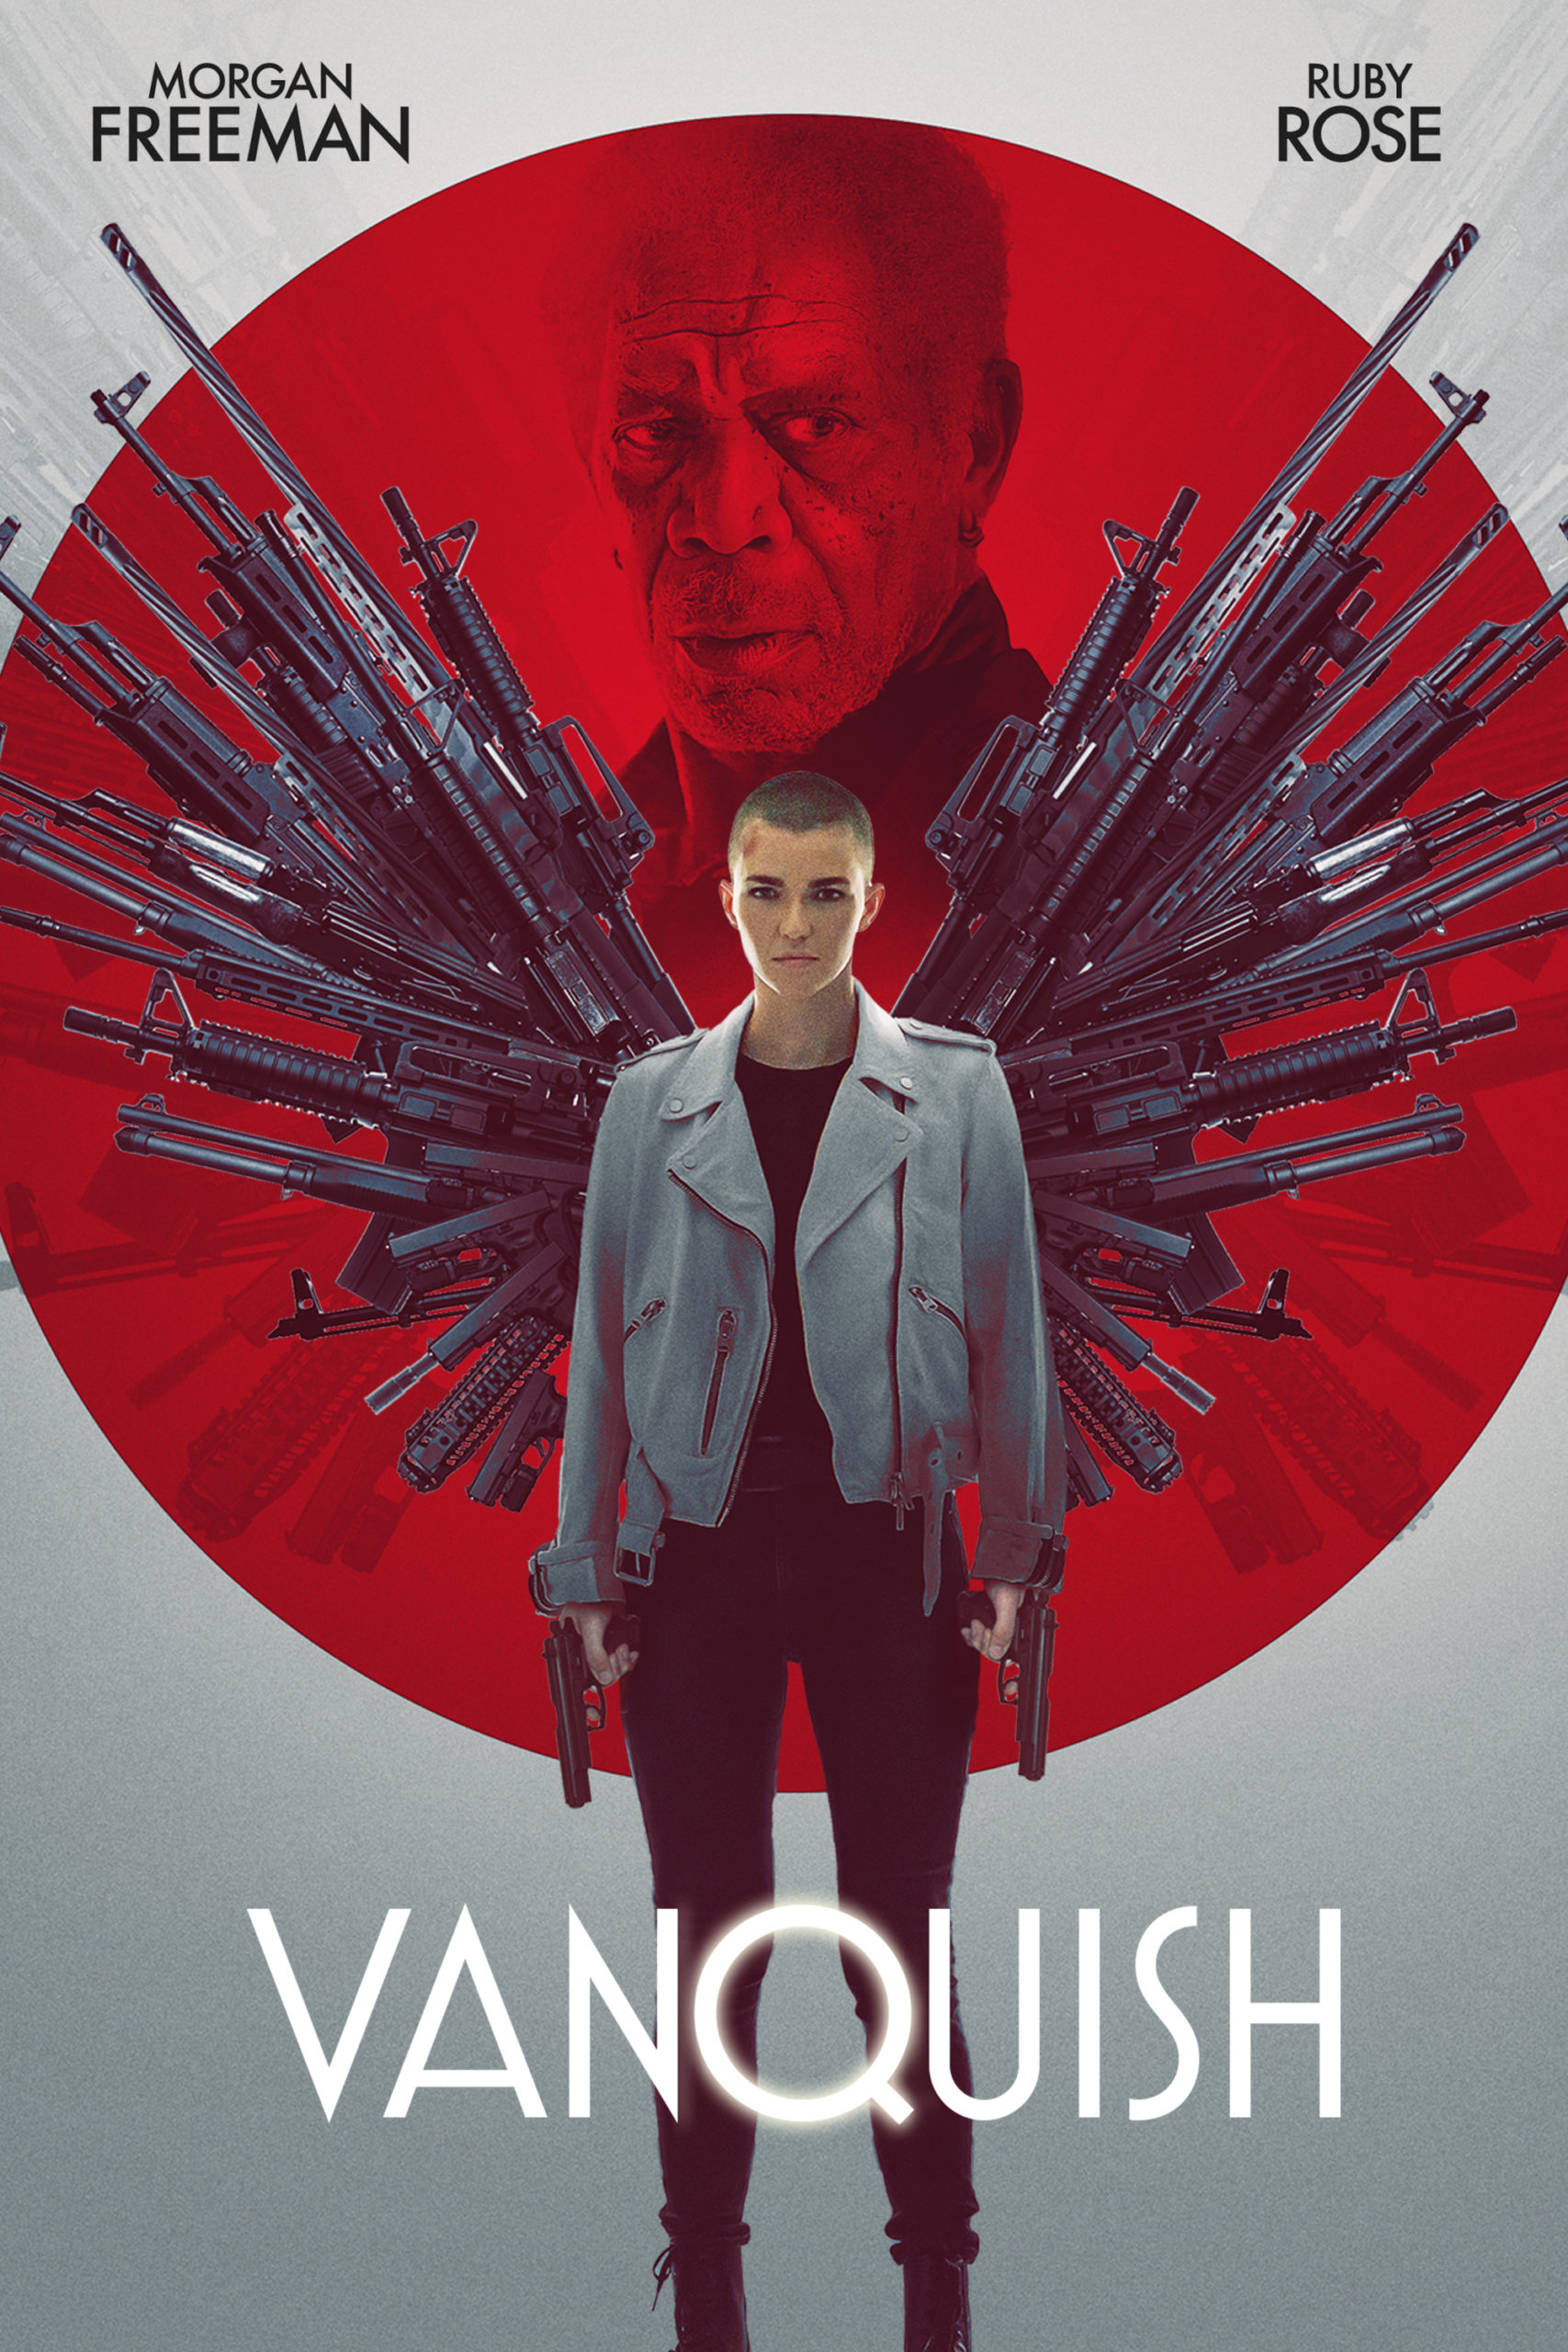 Vanquish Poster - Ruby Rose